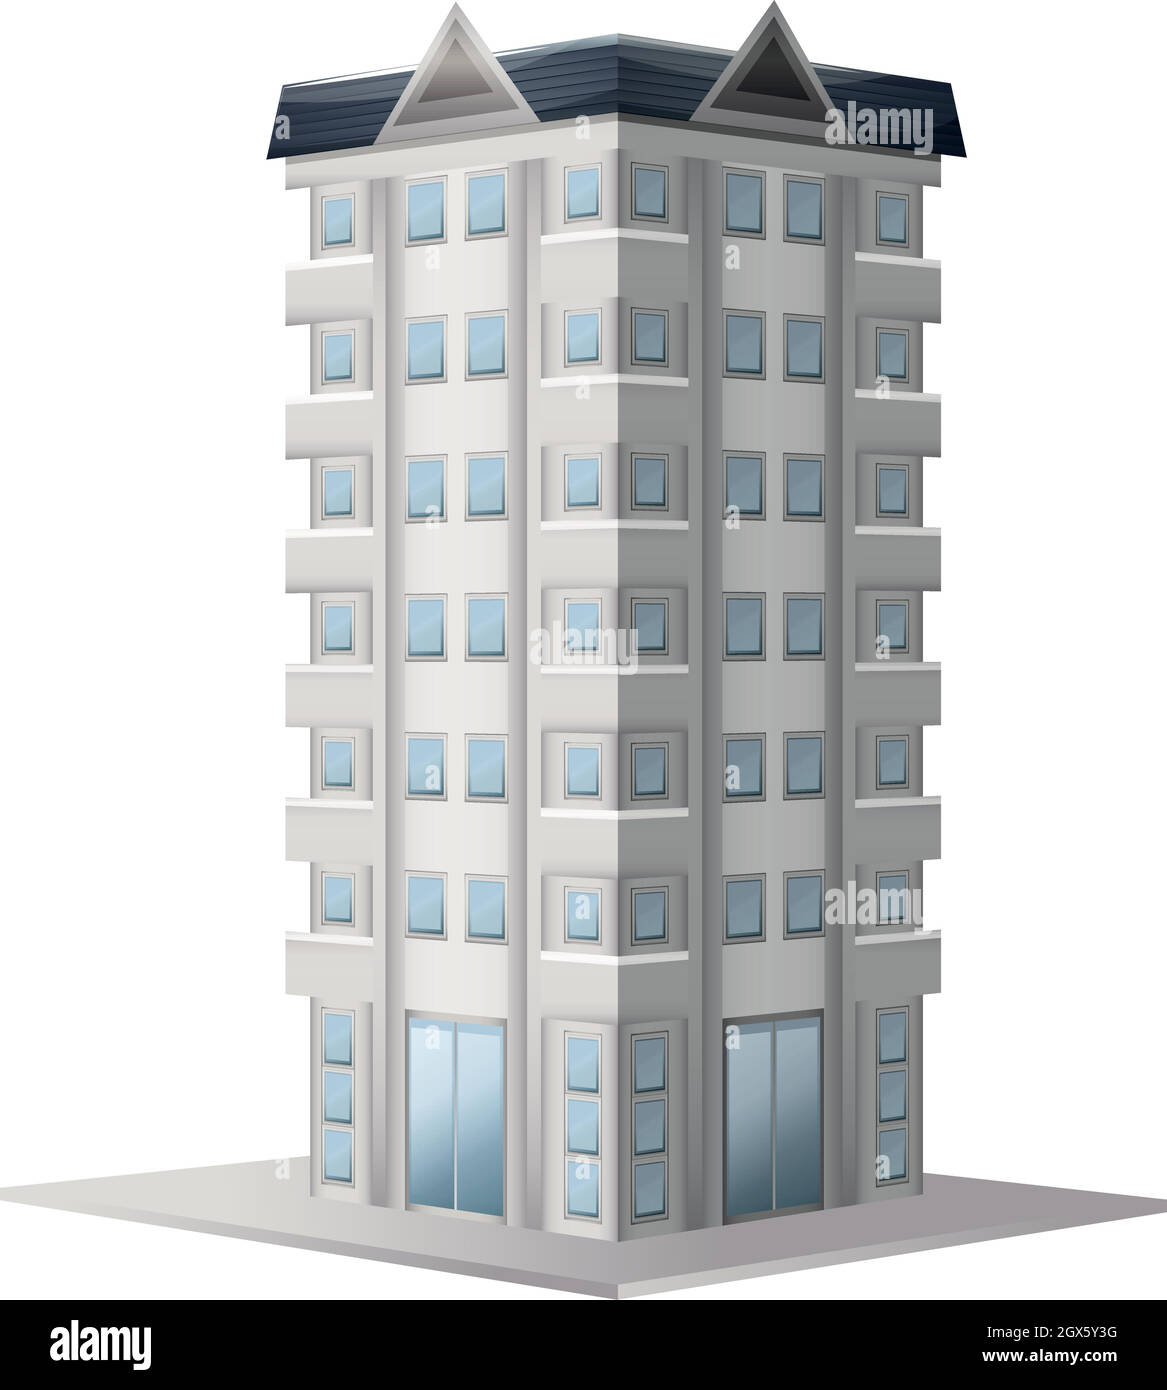 Architecture design for apartment building Stock Vector